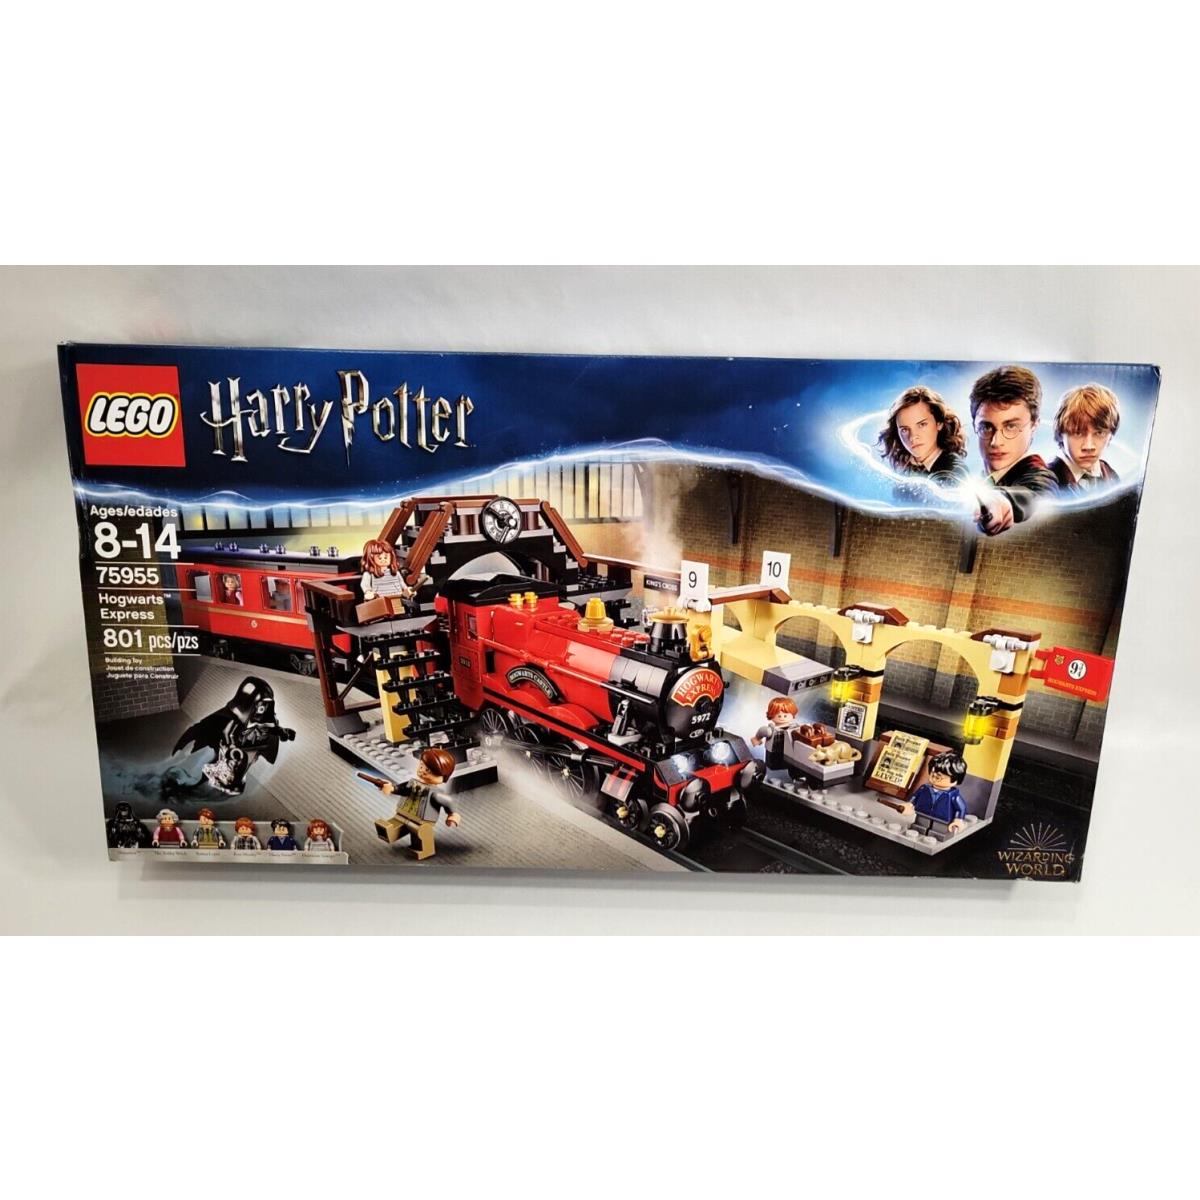 Lego Harry Potter TM - 75955 Hogwarts Express 801pcs - IN H